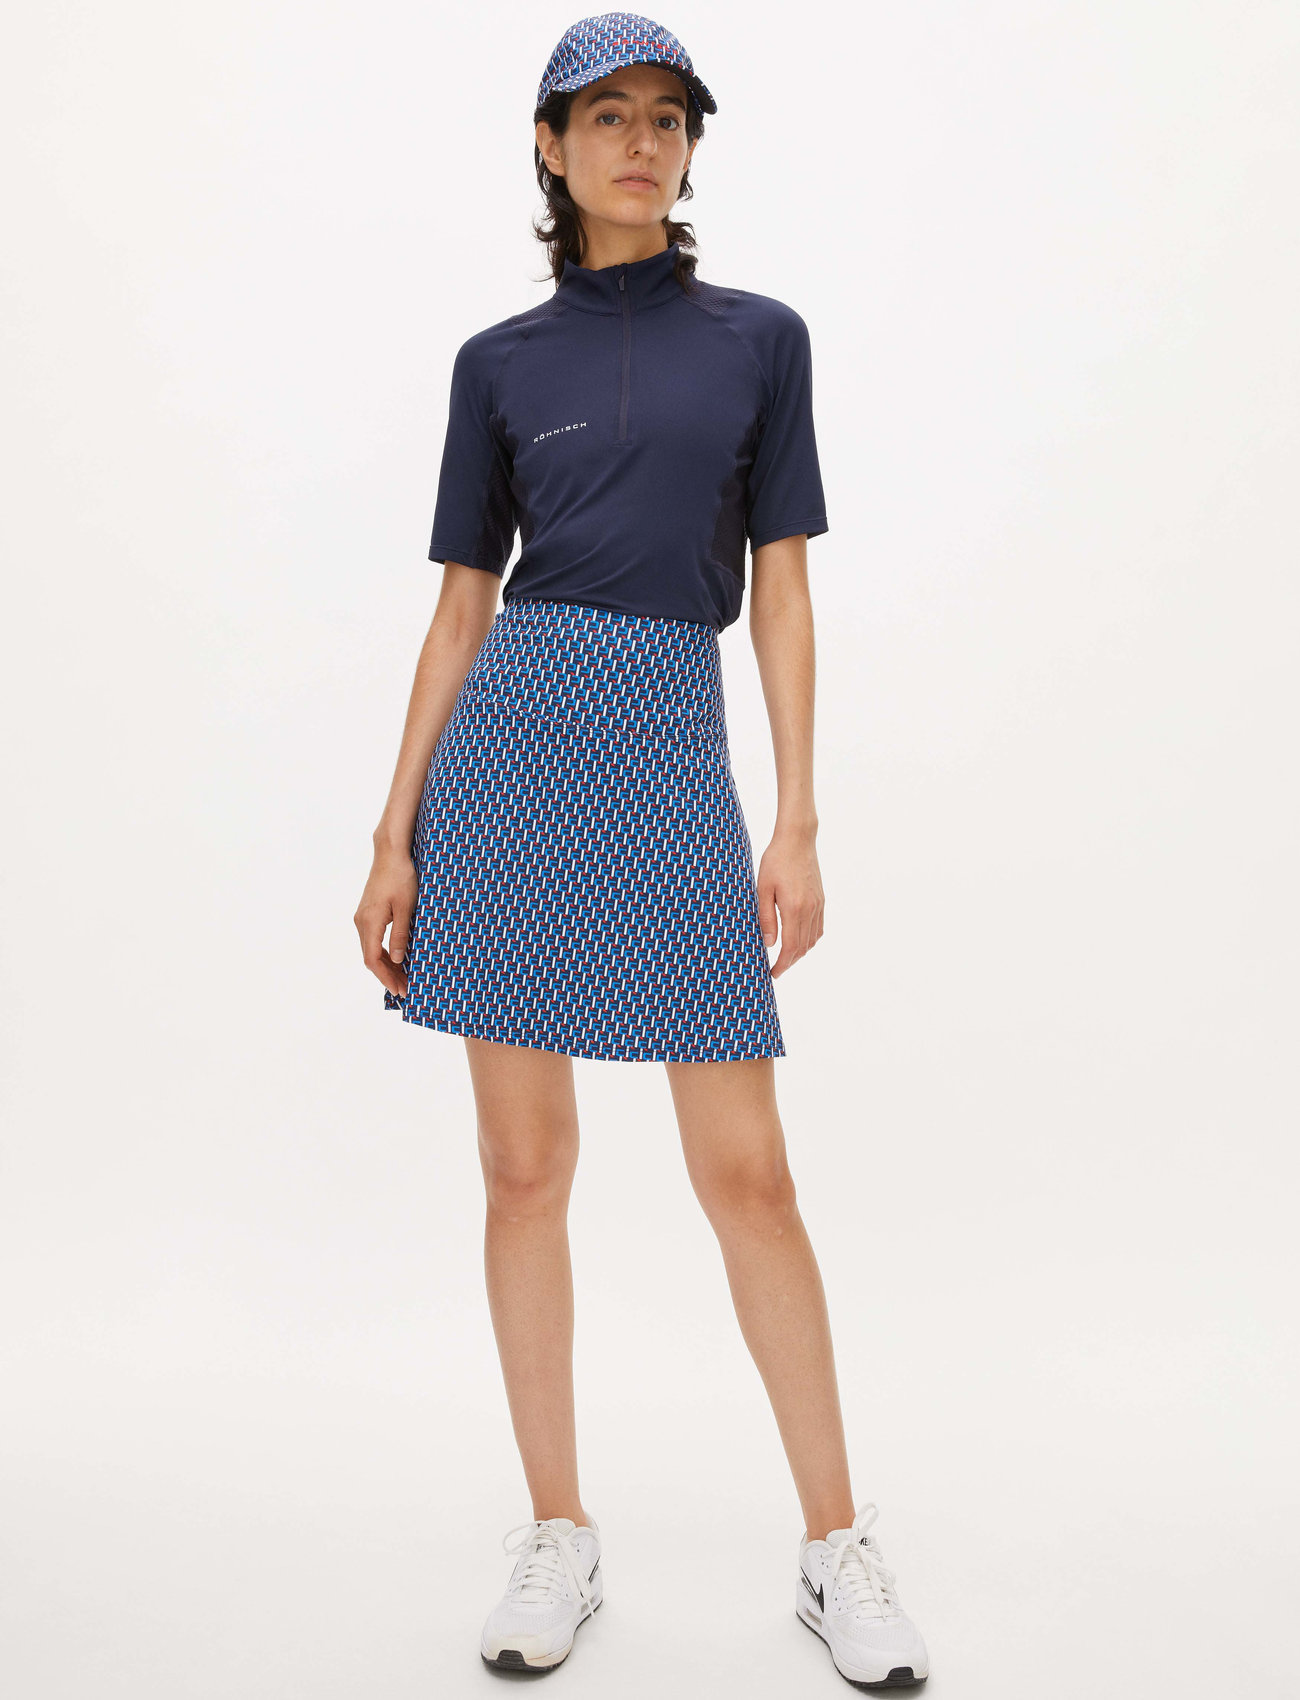 Röhnisch - Amy Regular Skort - skirts - logo blue - 1